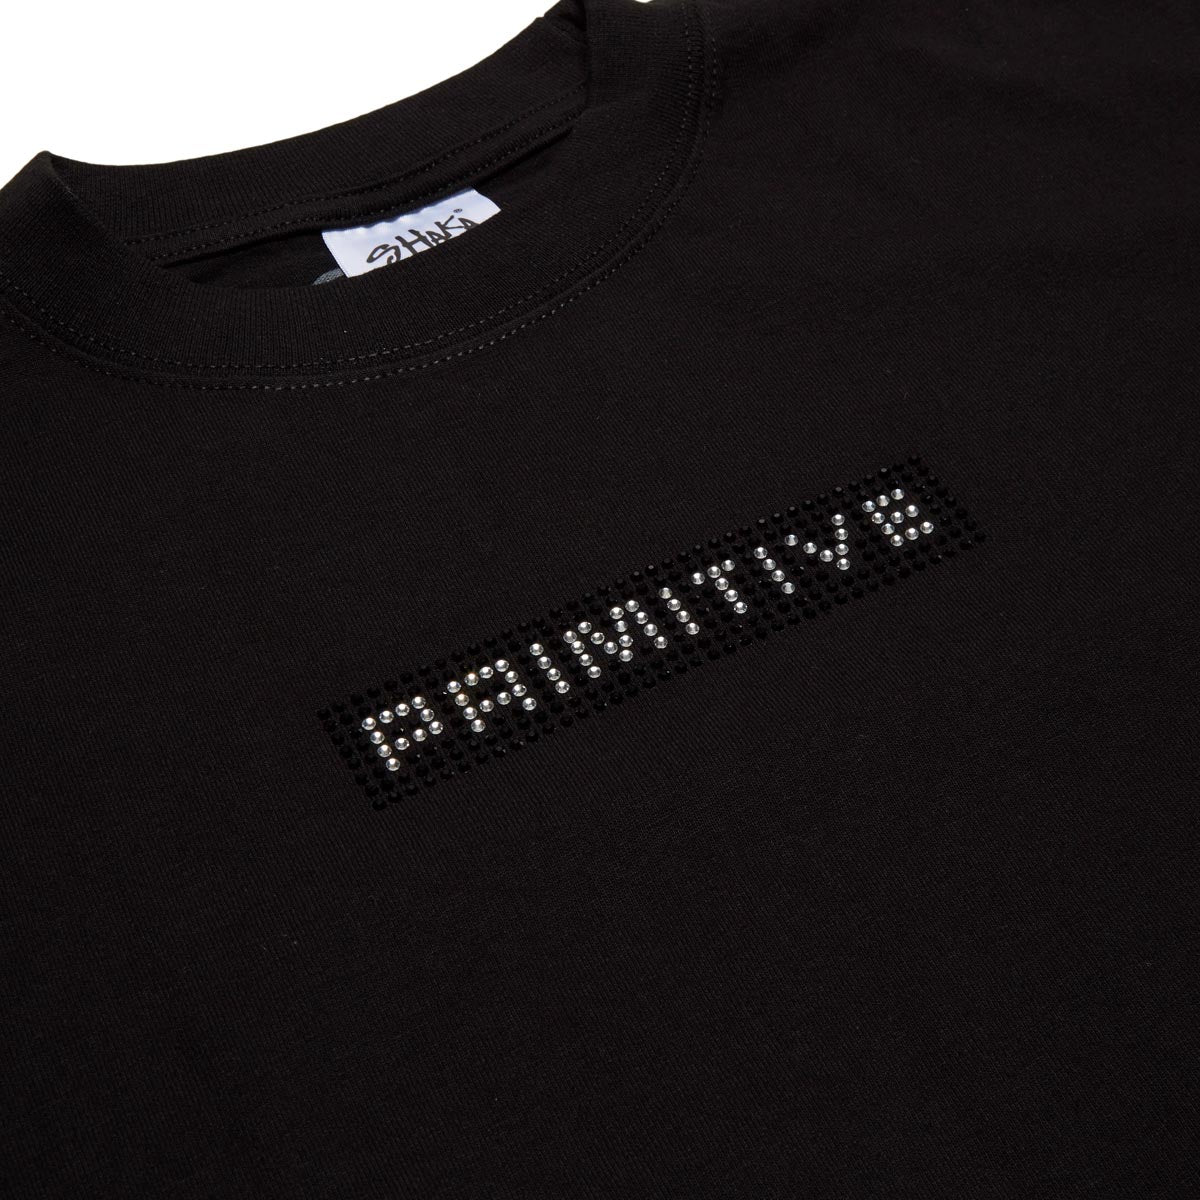 Primitive Boxed Rhinestone T-Shirt - Black image 2